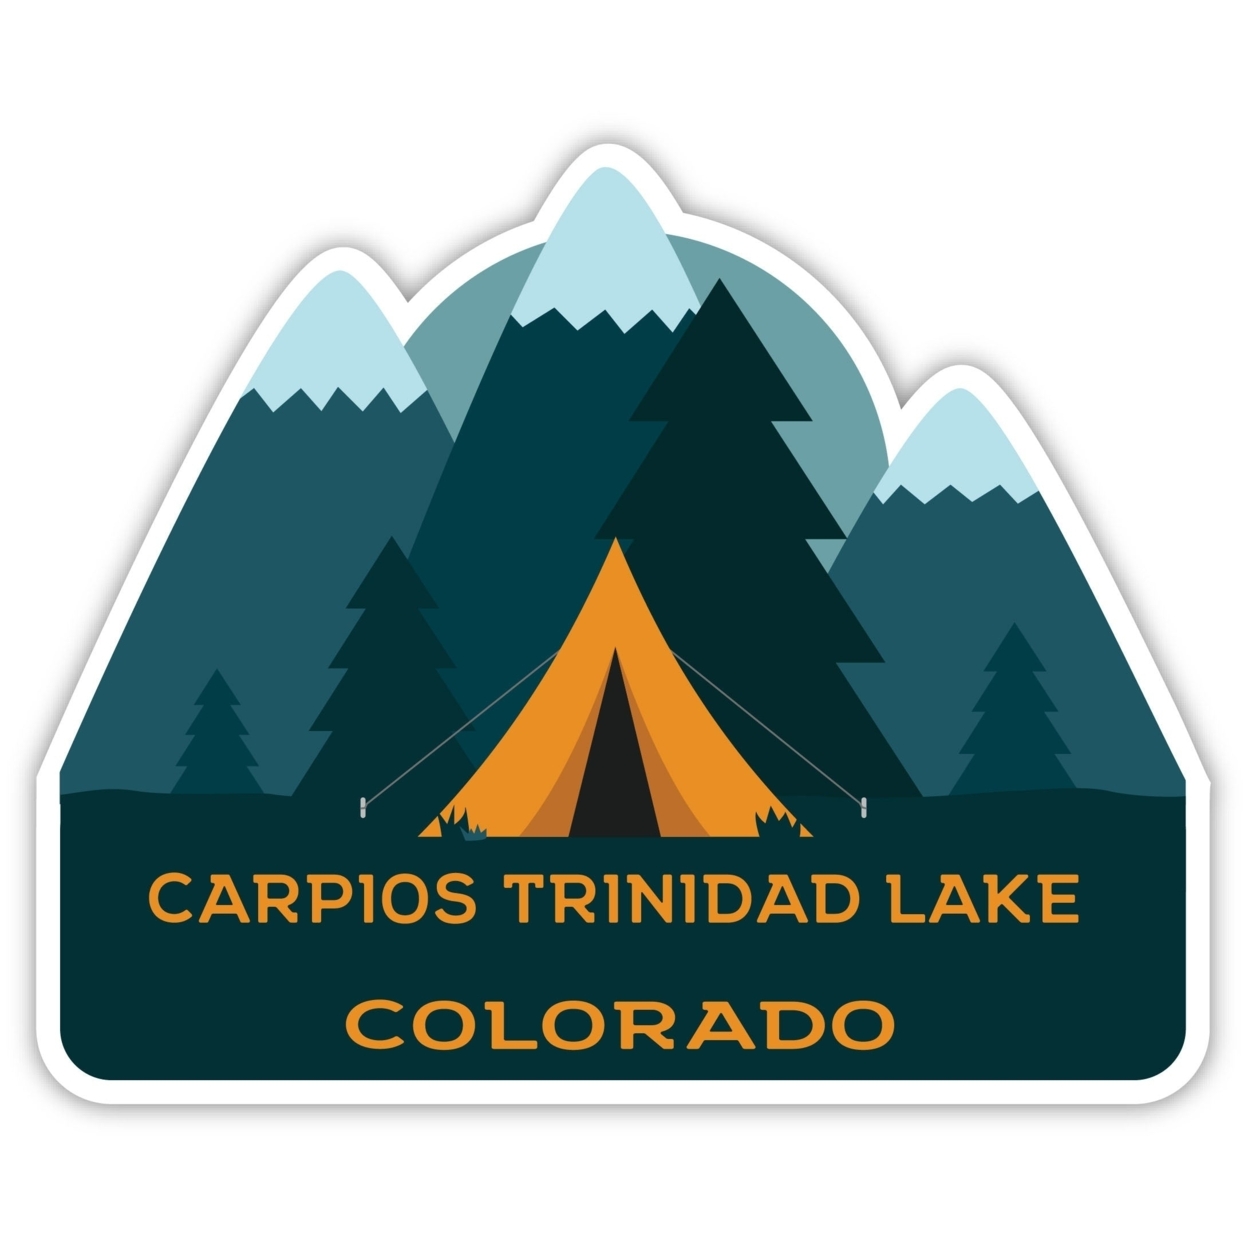 Carpios Trinidad Lake Colorado Souvenir Decorative Stickers (Choose Theme And Size) - Single Unit, 8-Inch, Bear